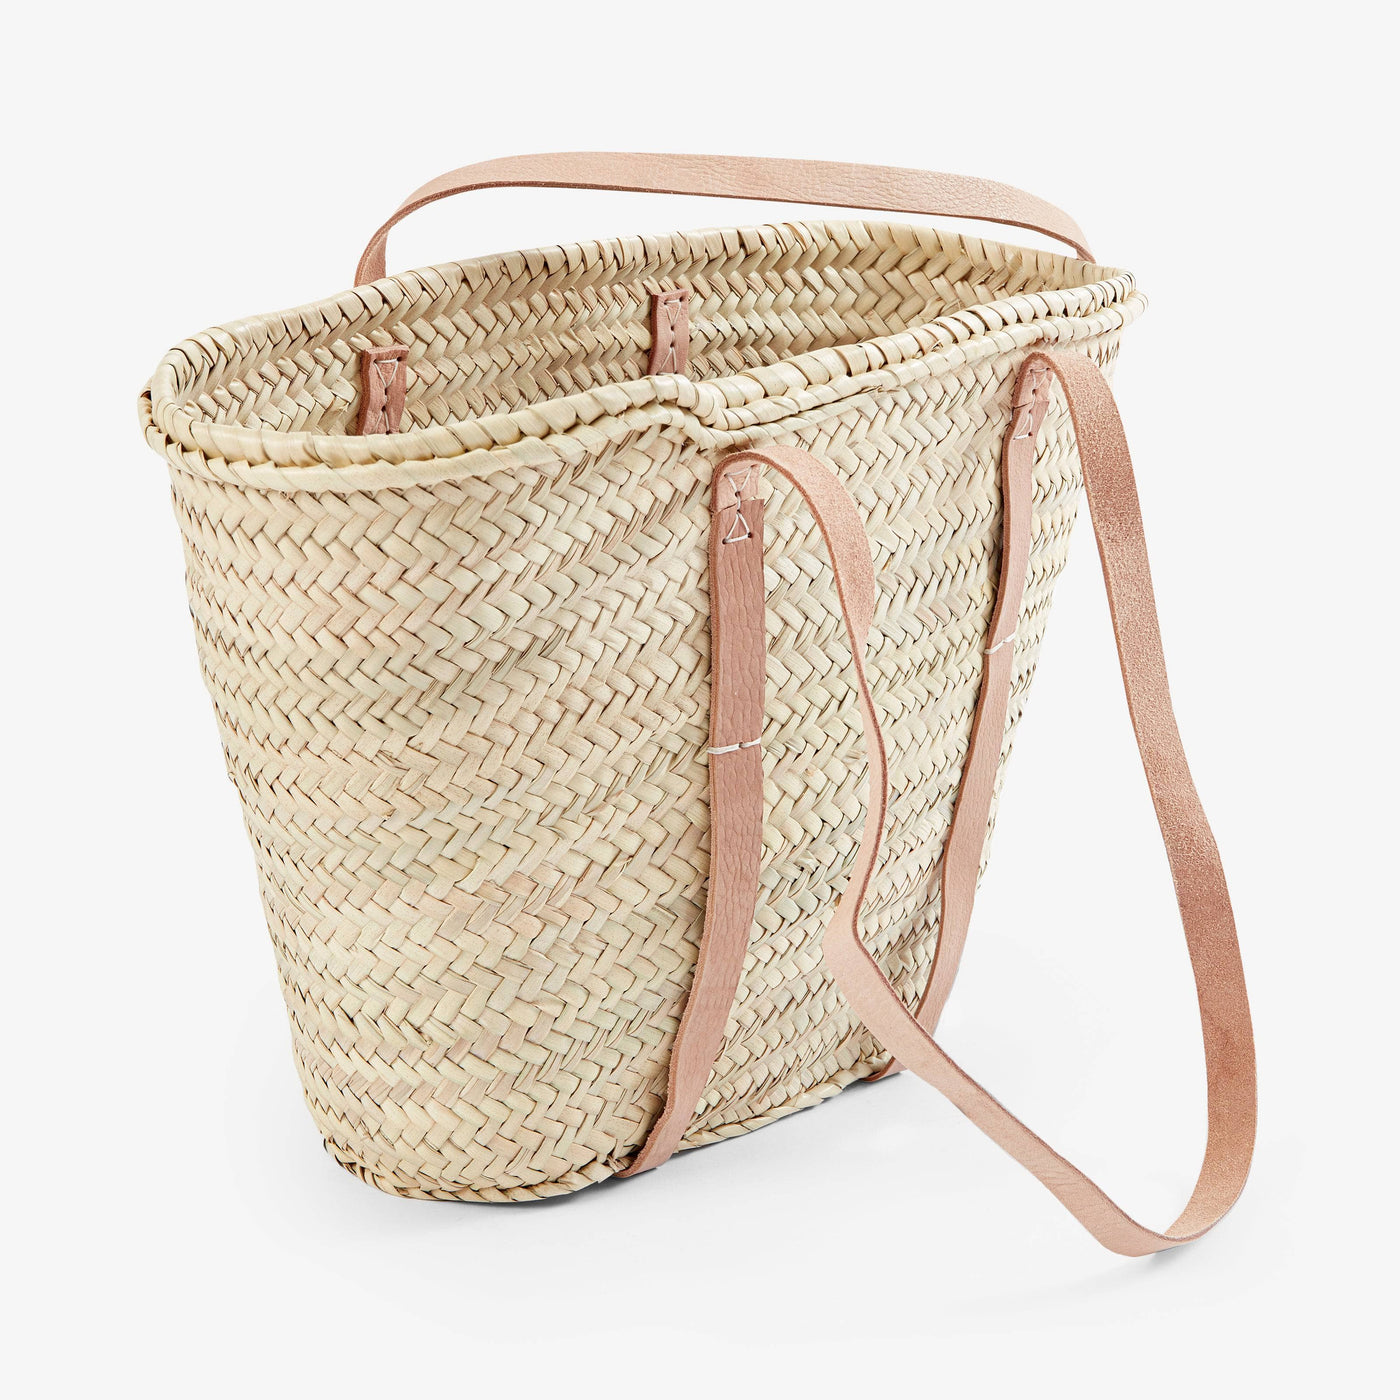 Margate Shopping Basket, Natural, 46x24x32 cm 3